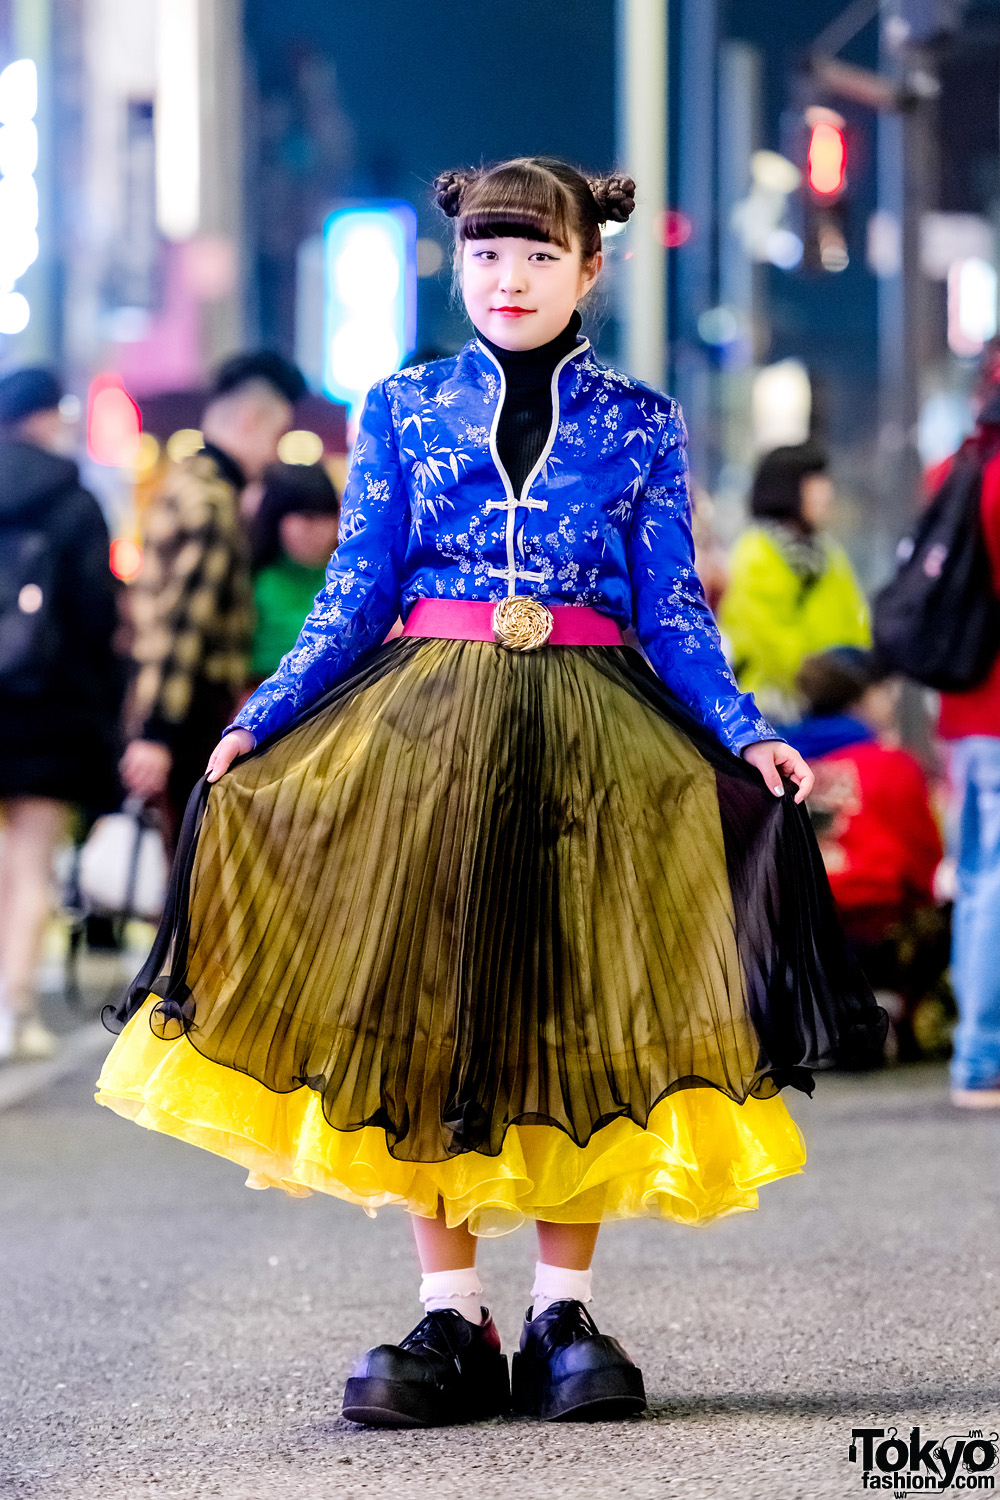 San To Nibun No Ichi Floral Top, Pleated Skirt & Demonia Platforms in Harajuku